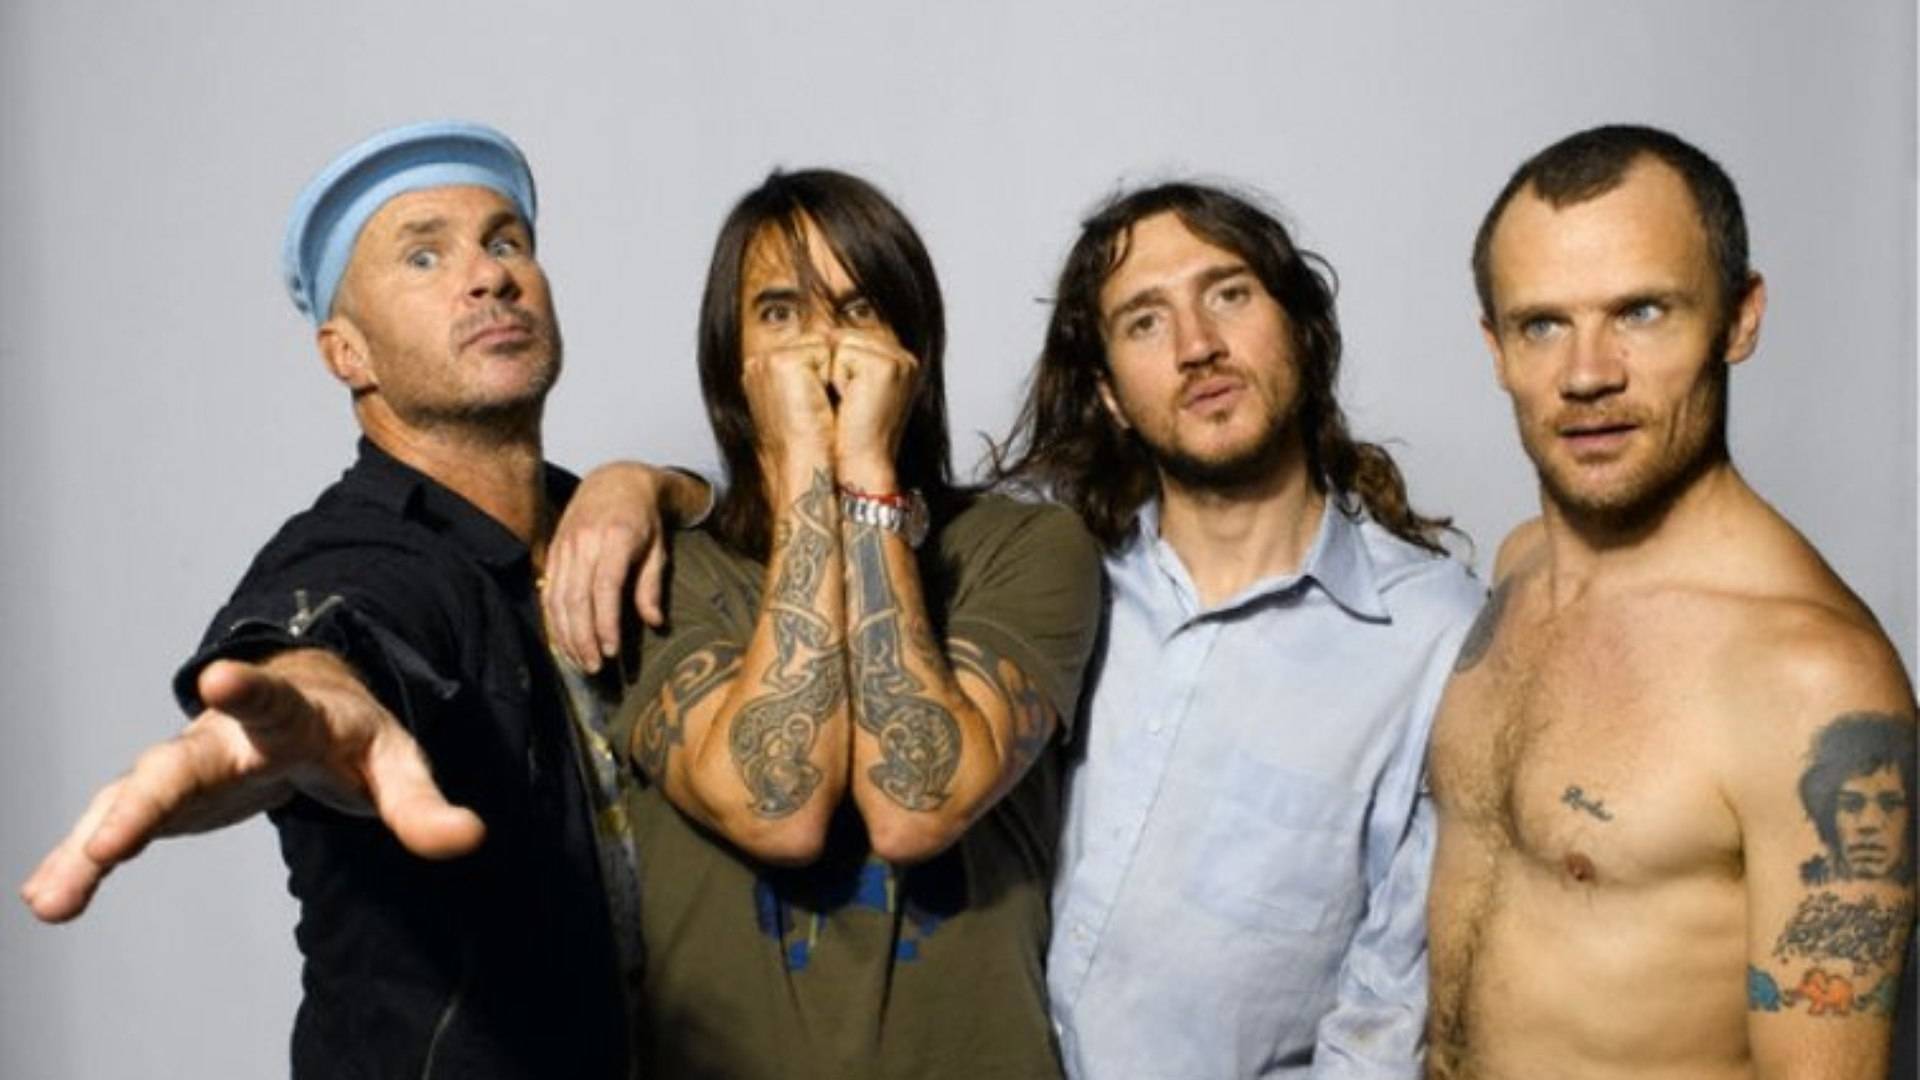 Клипы hot chili peppers. Группа Red hot Chili Peppers. Red hot Chili Peppers рок группа. Red hot Chili Peppers фото группы. Red hot Chili Peppers состав.